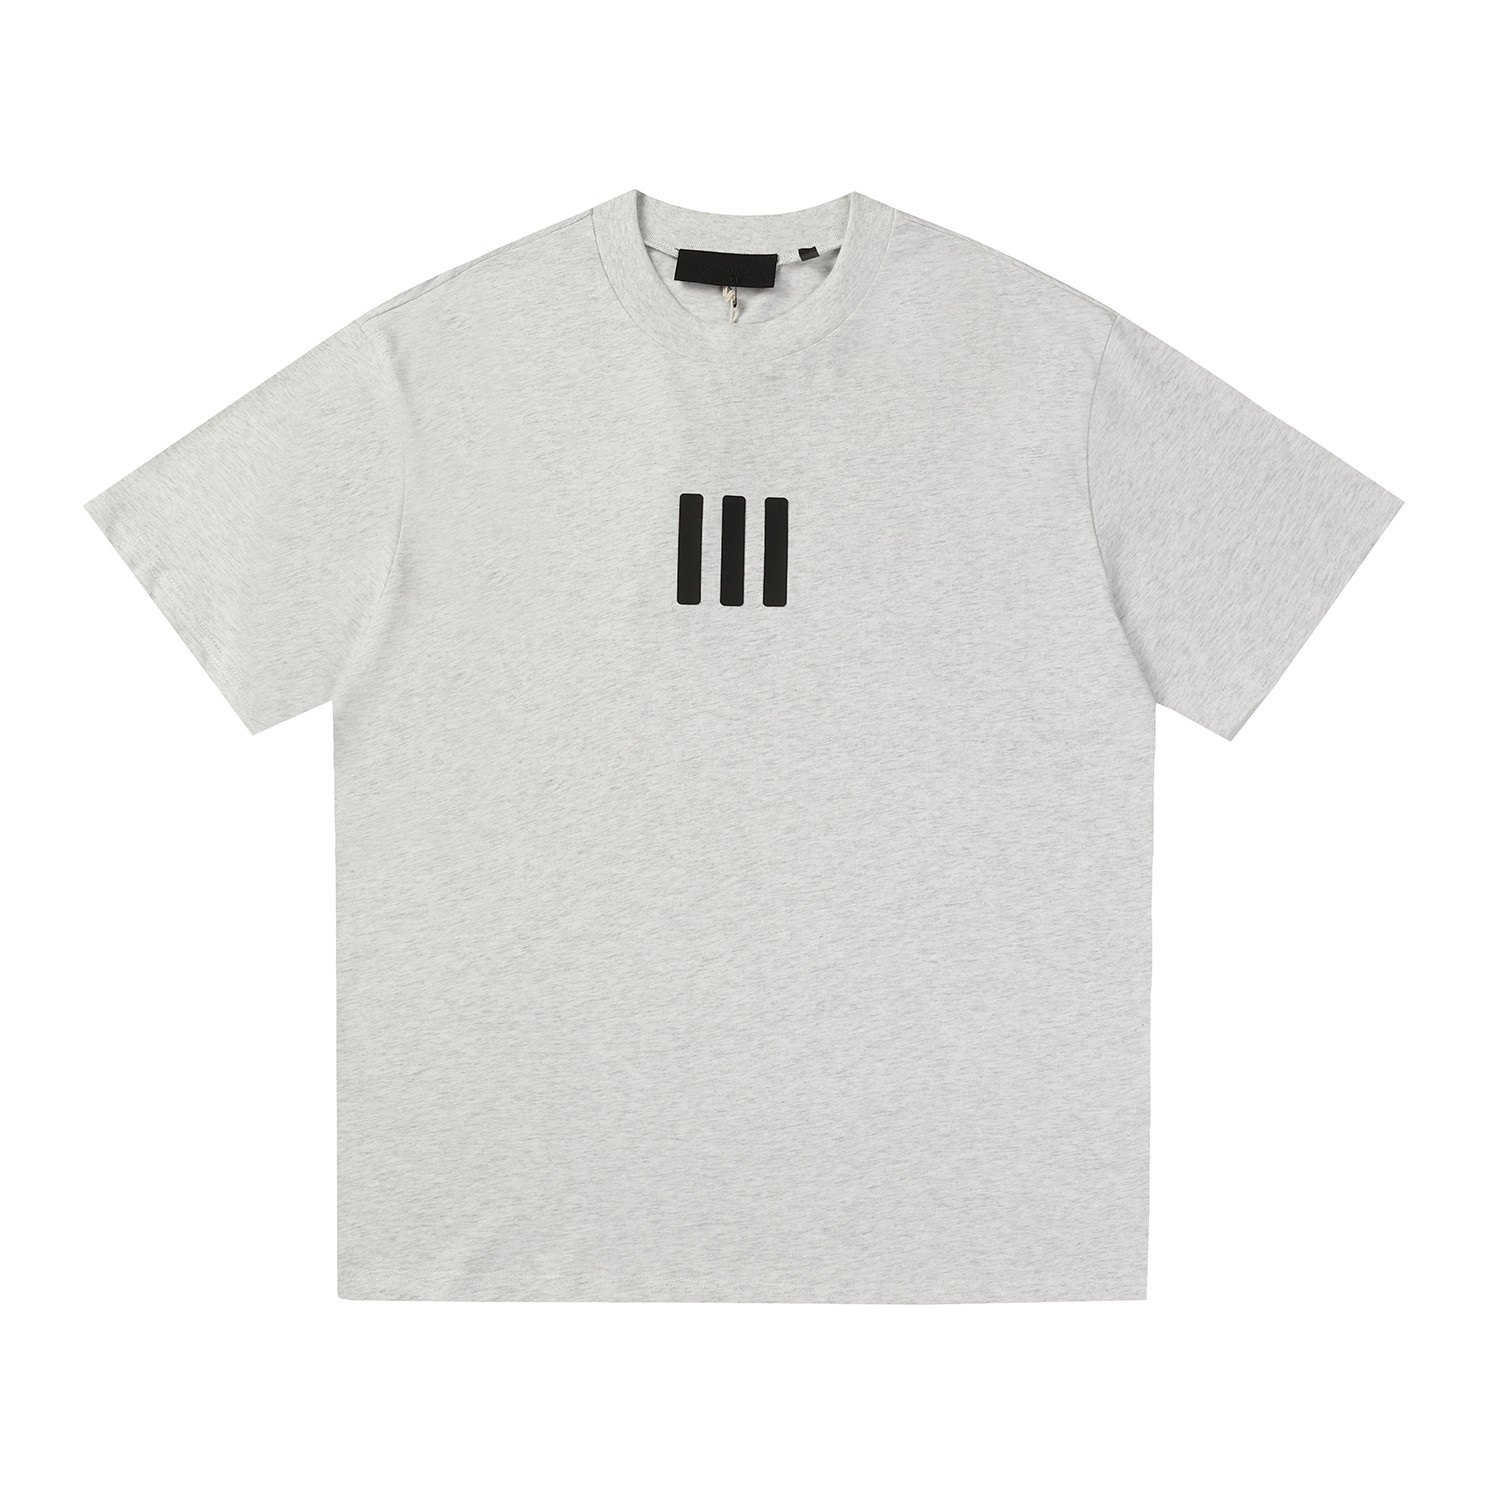 ESSENTIALS Clothing T-Shirt Black Grey White Printing Cotton Essential Short Sleeve